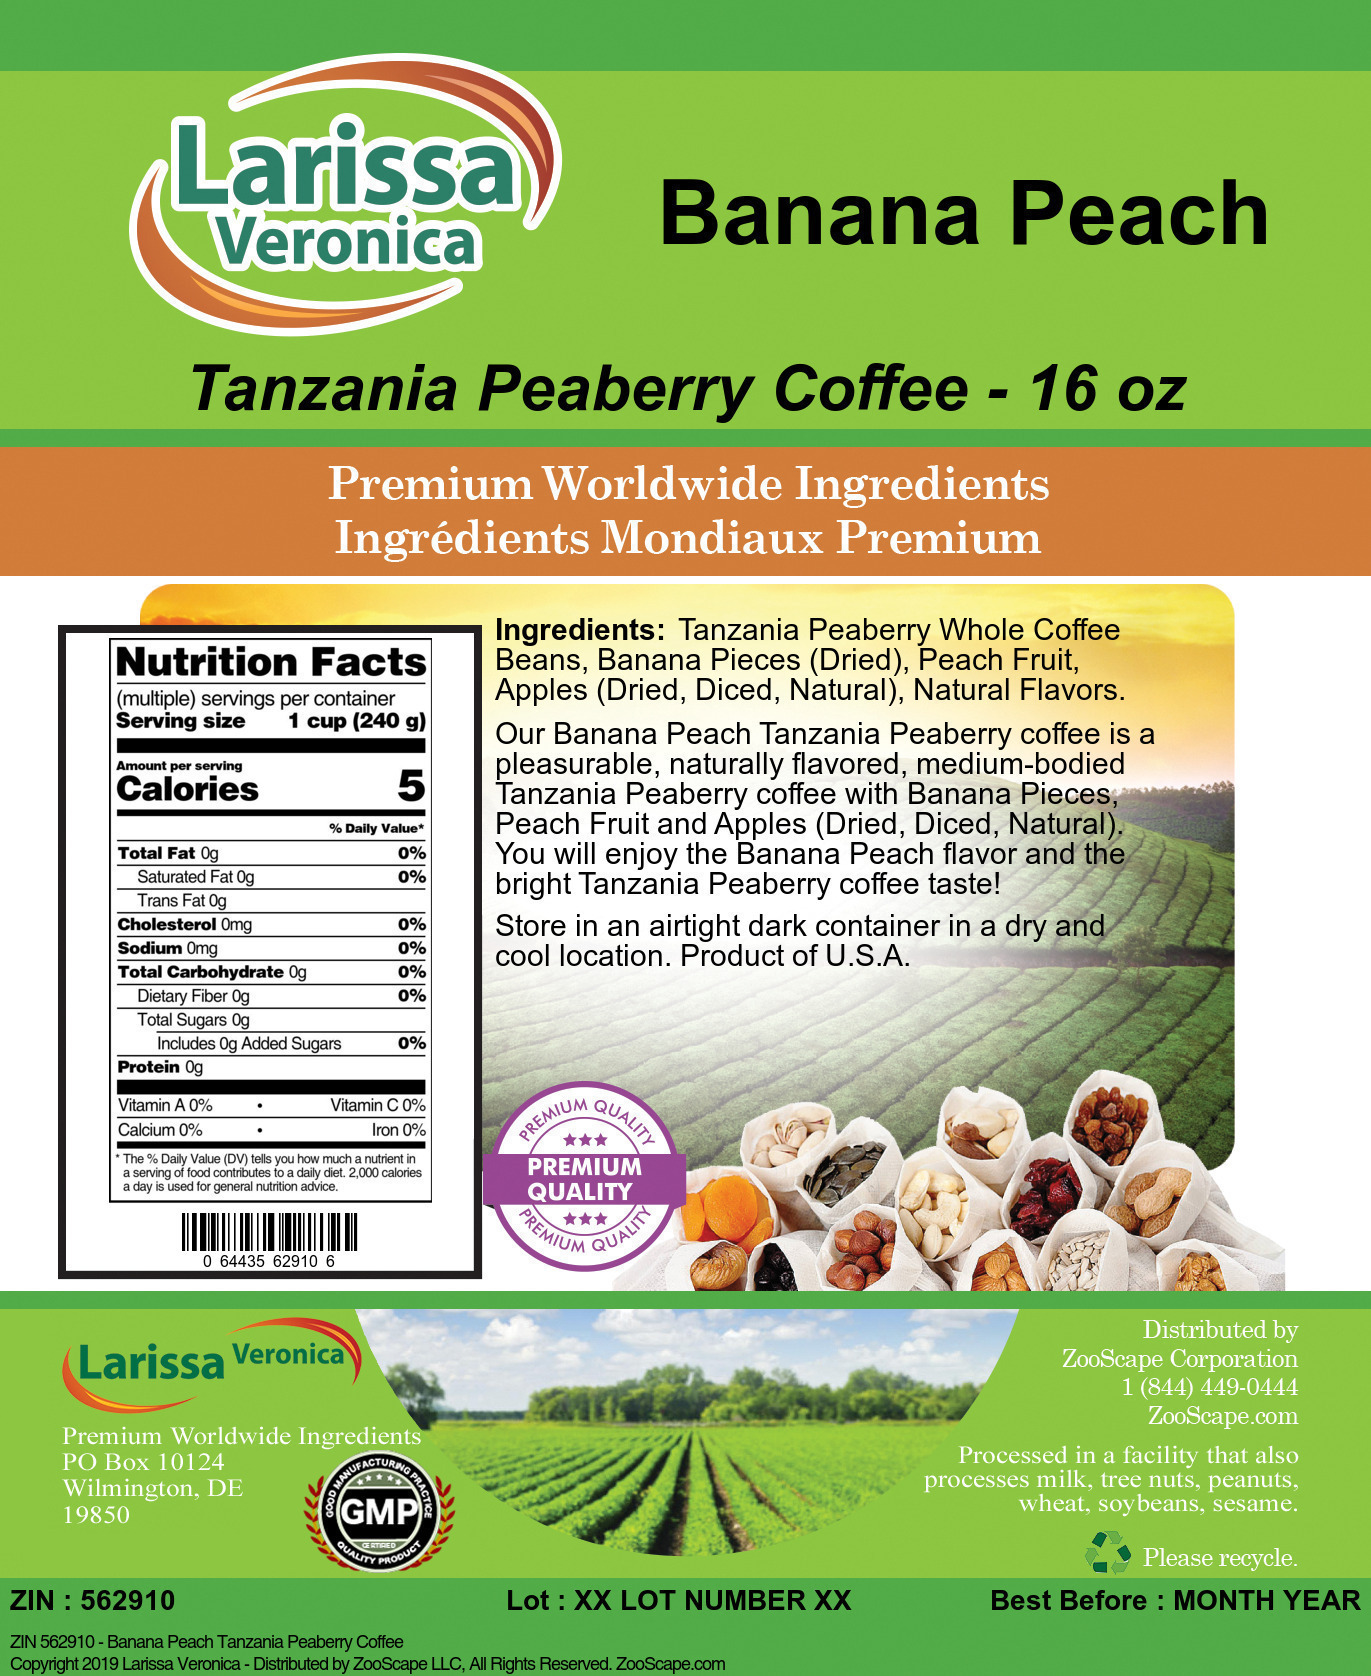 Banana Peach Tanzania Peaberry Coffee - Label